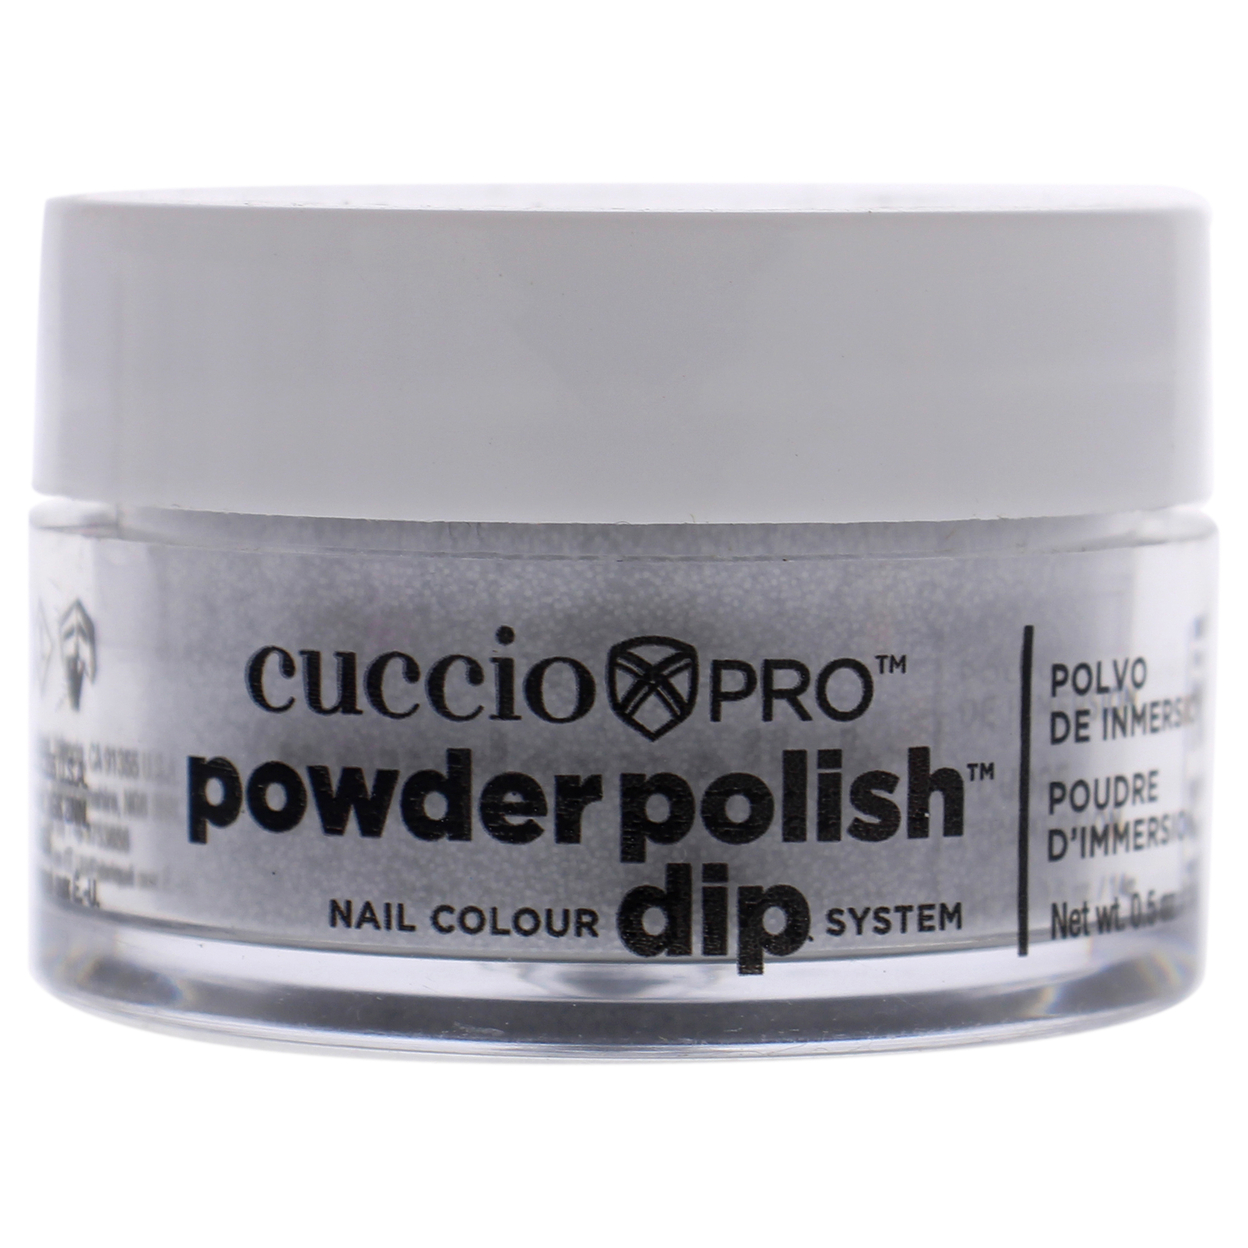 Cuccio Colour Pro Powder Polish Nail Colour Dip System - Silver Glitter Nail Powder 0.5 Oz